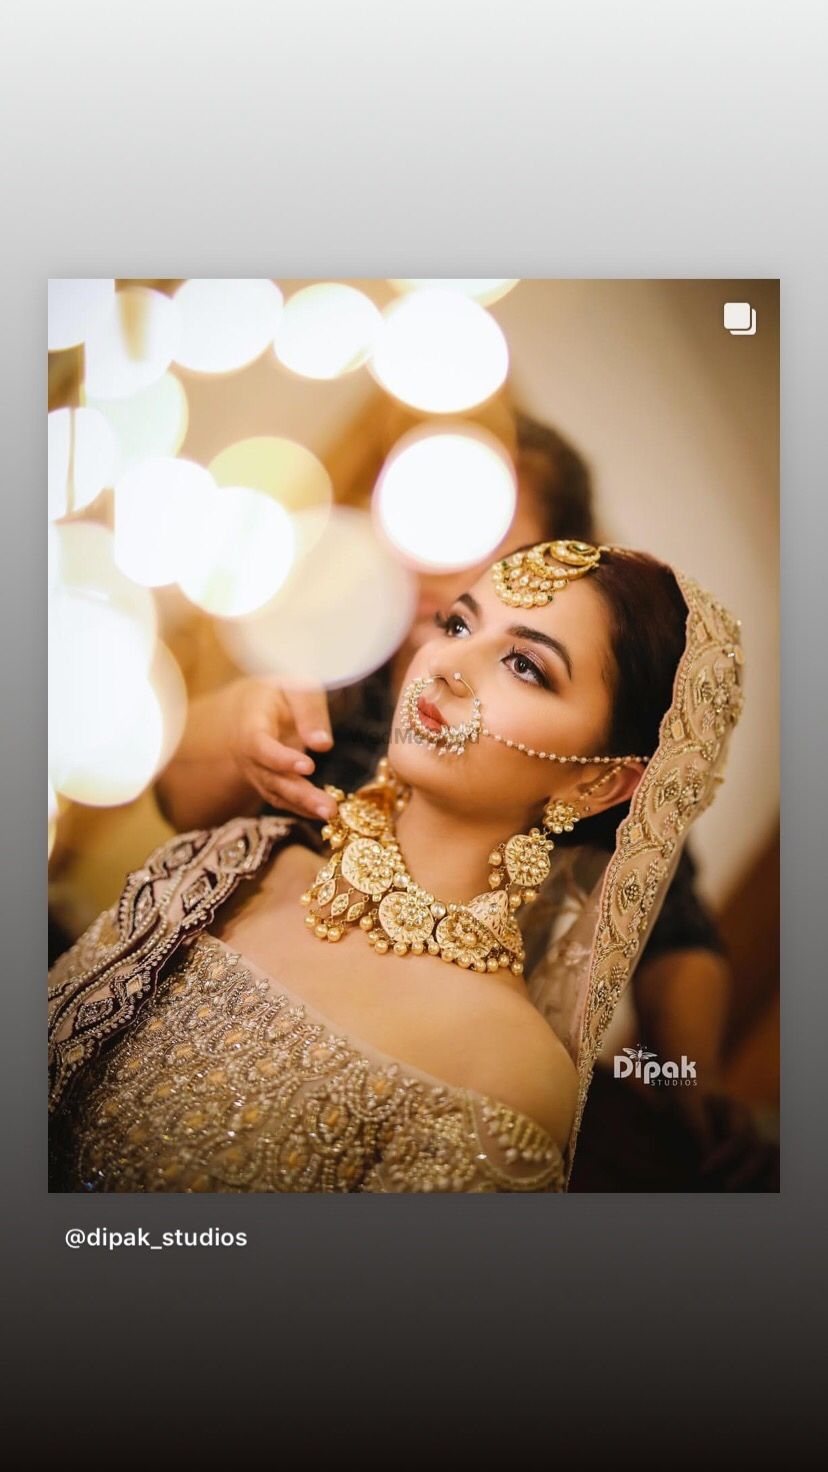 Photo By Mohita Nangia Makeup Artist  - Bridal Makeup